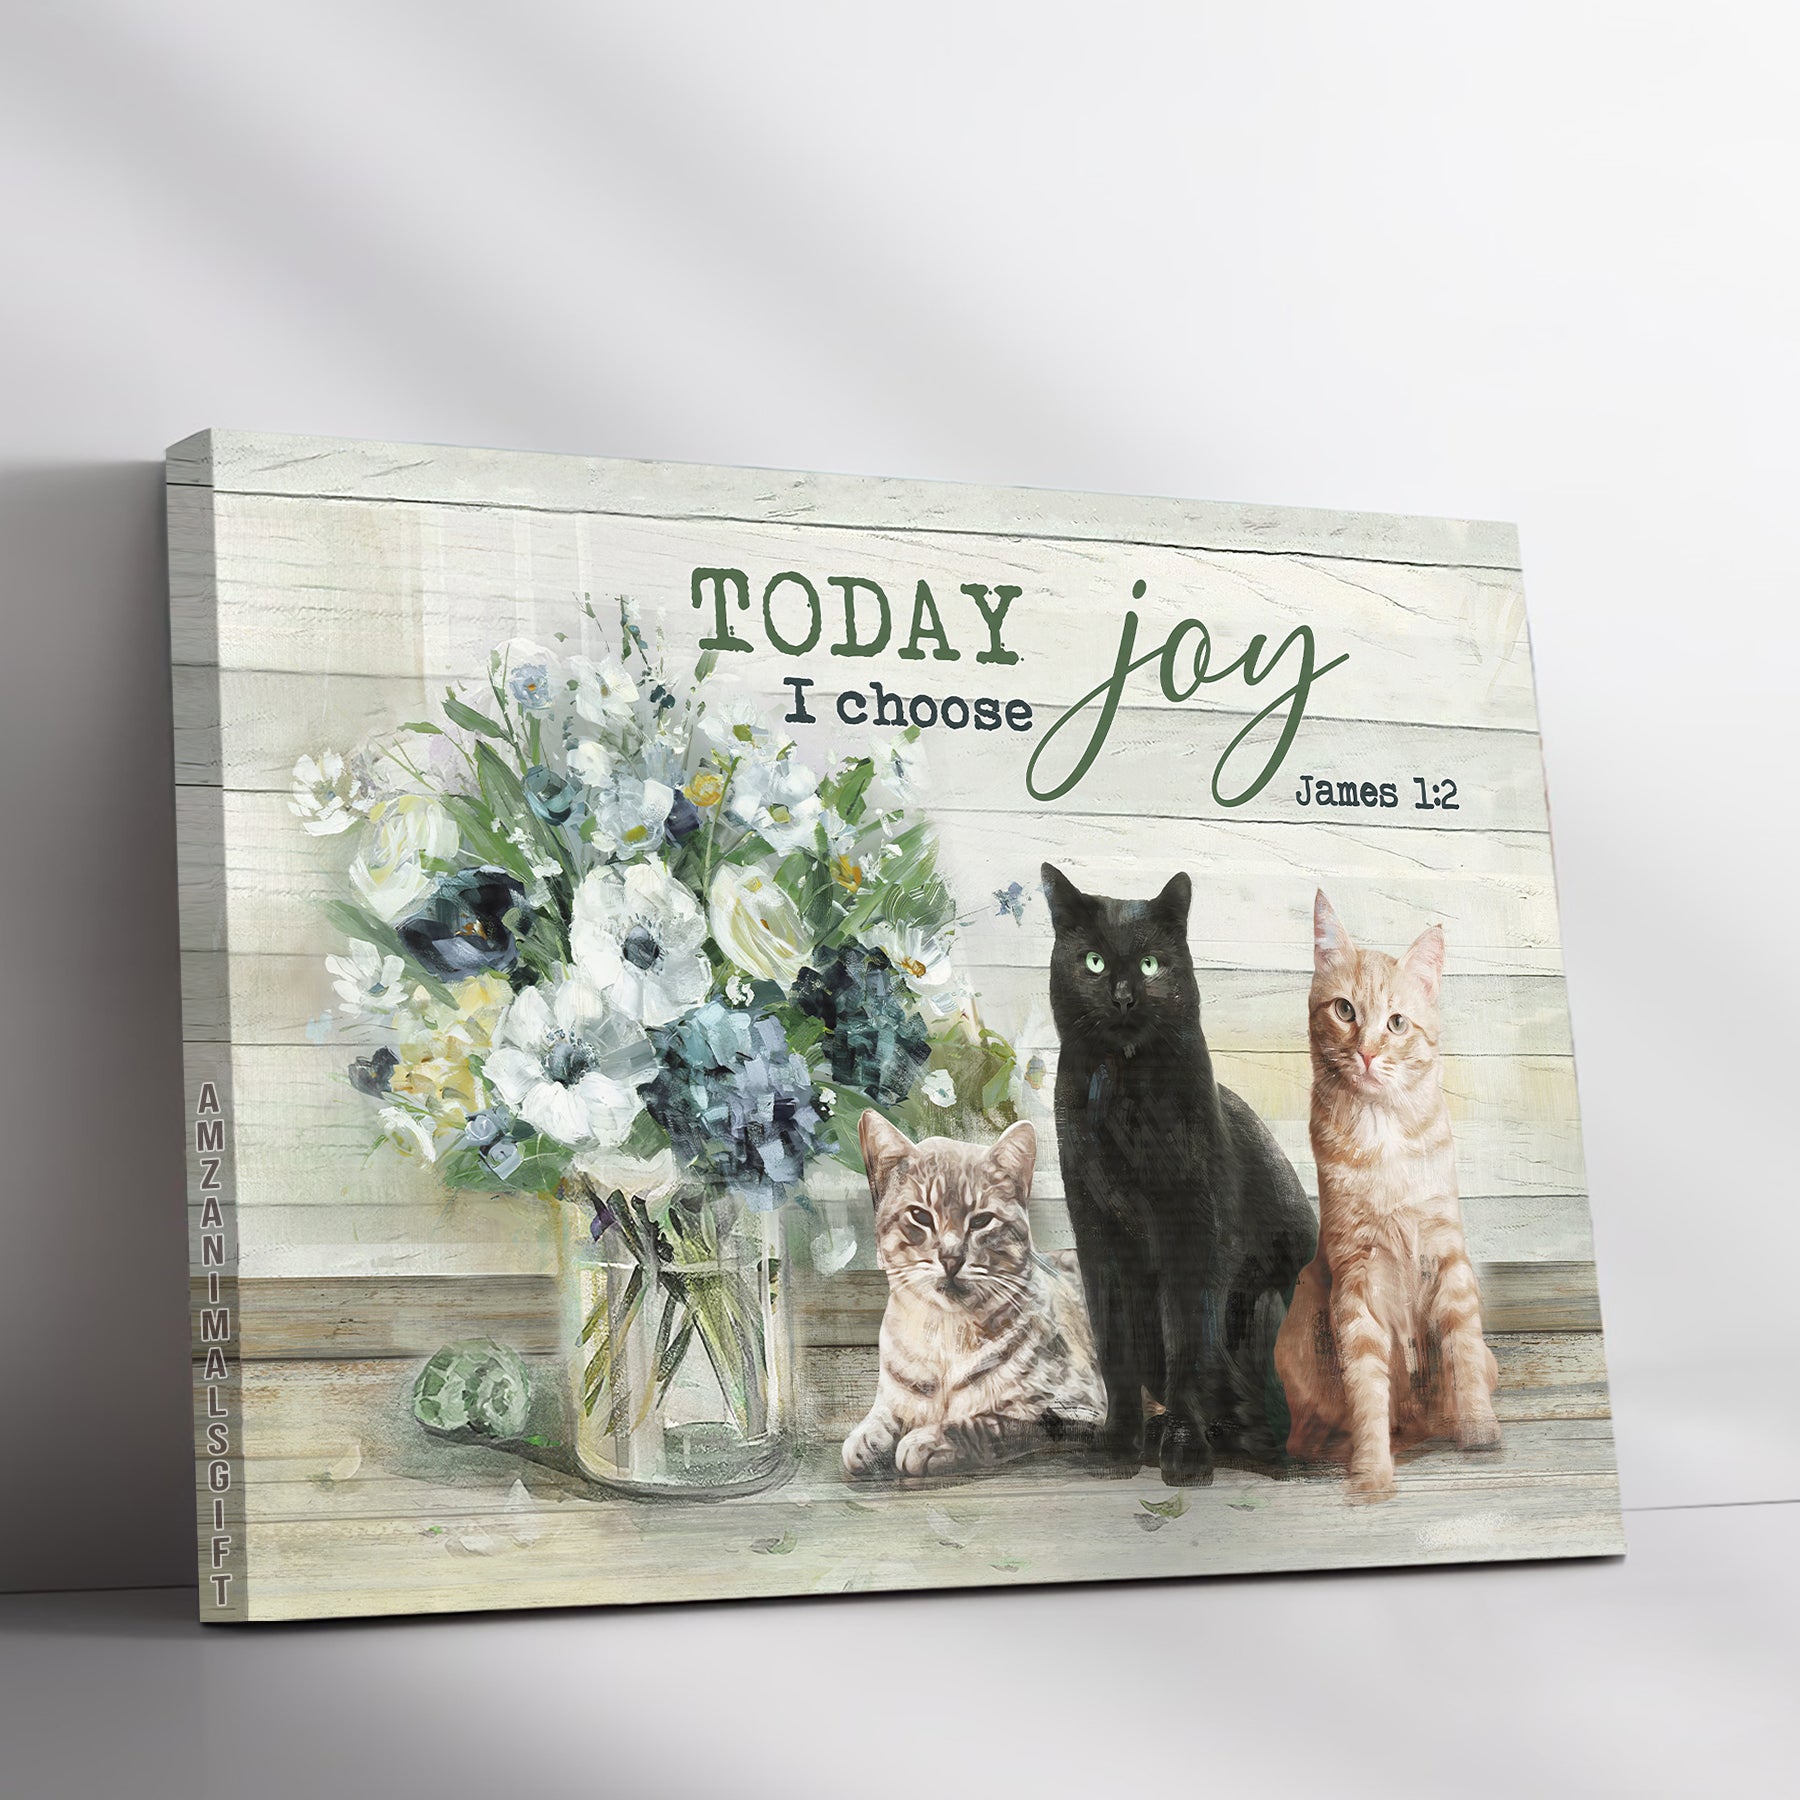 Jesus Landscape Canvas - Adorable cats, Flower vase Landscape Canvas - Gift For Religious Christian - Today I Choose Joy